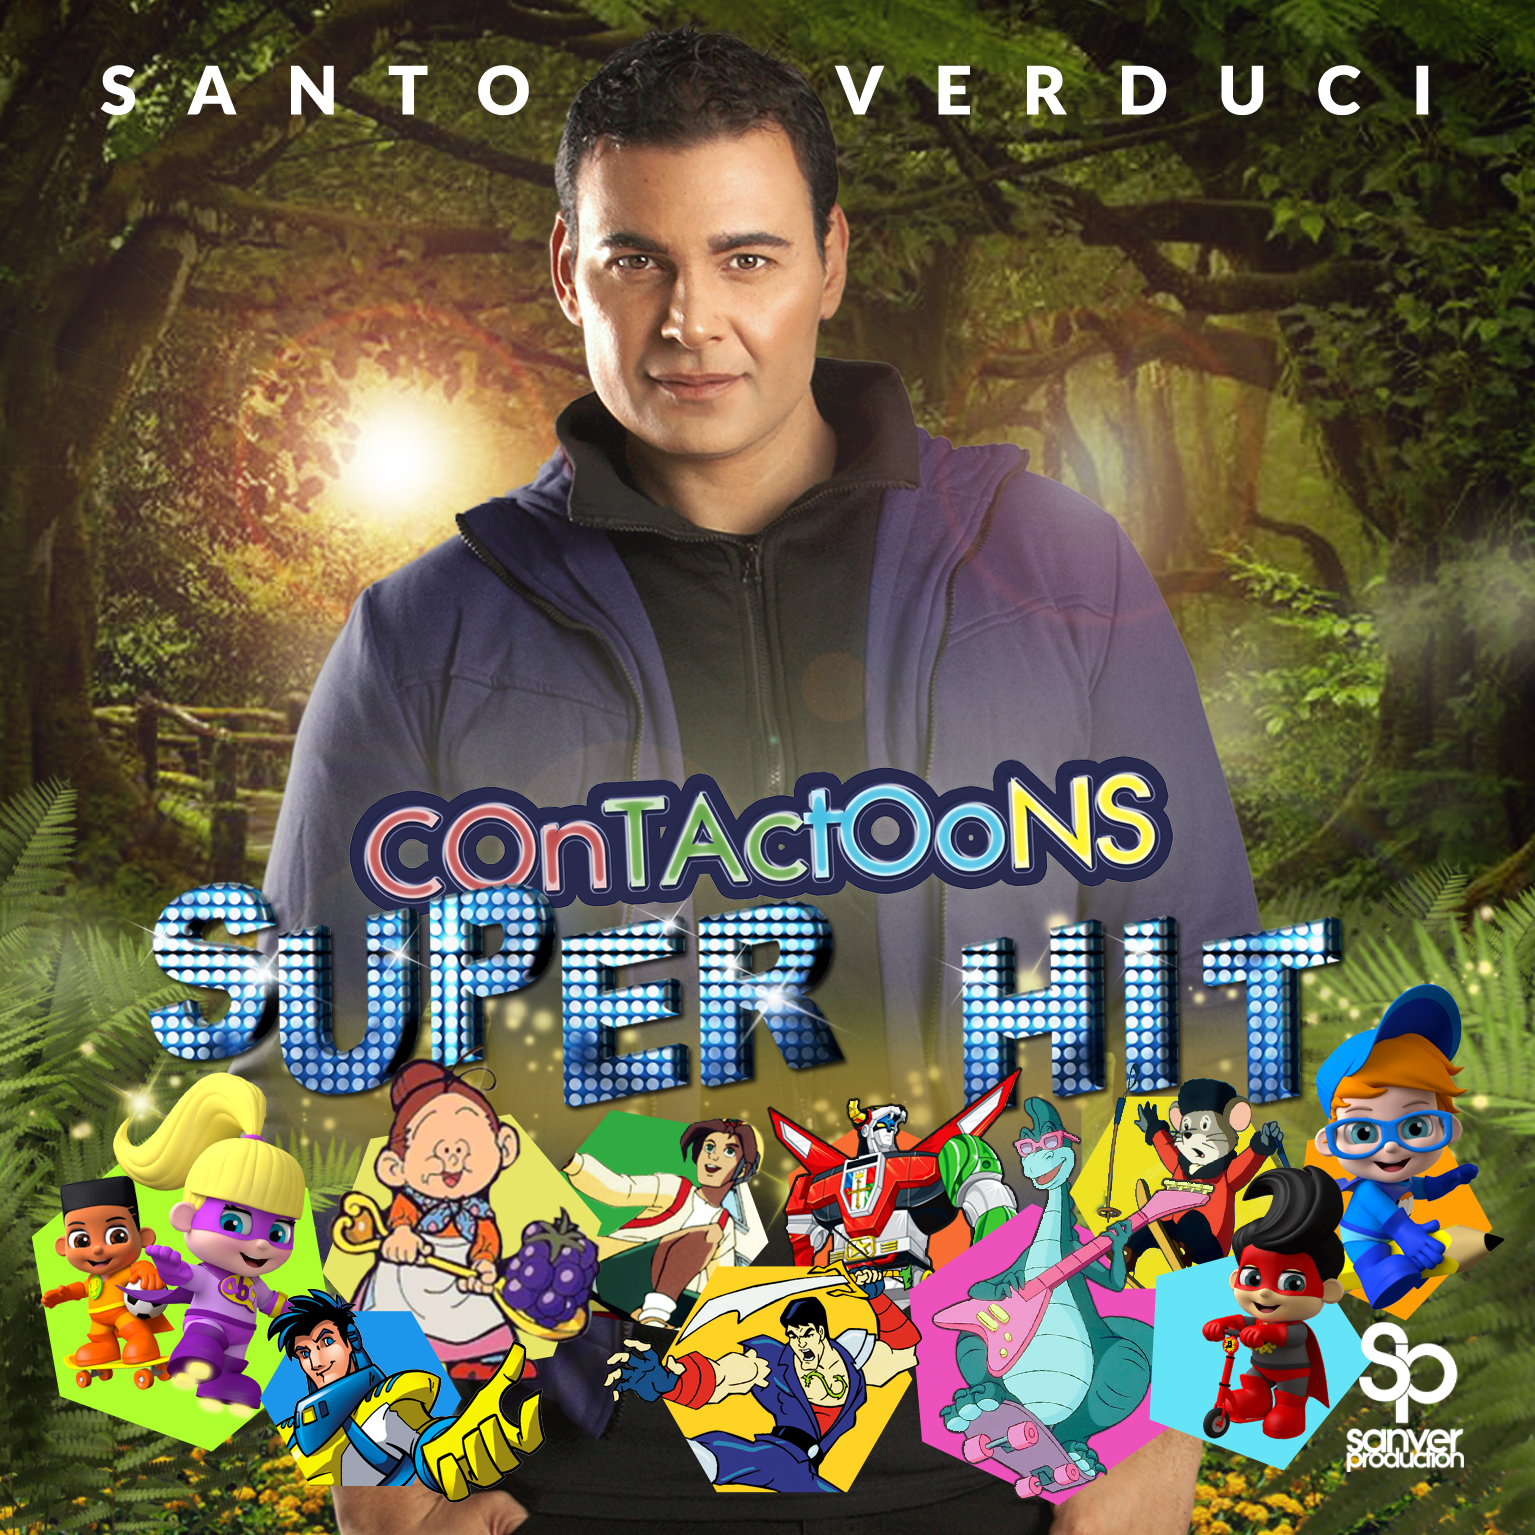 Contactoons Super Hit  Santo Verduci